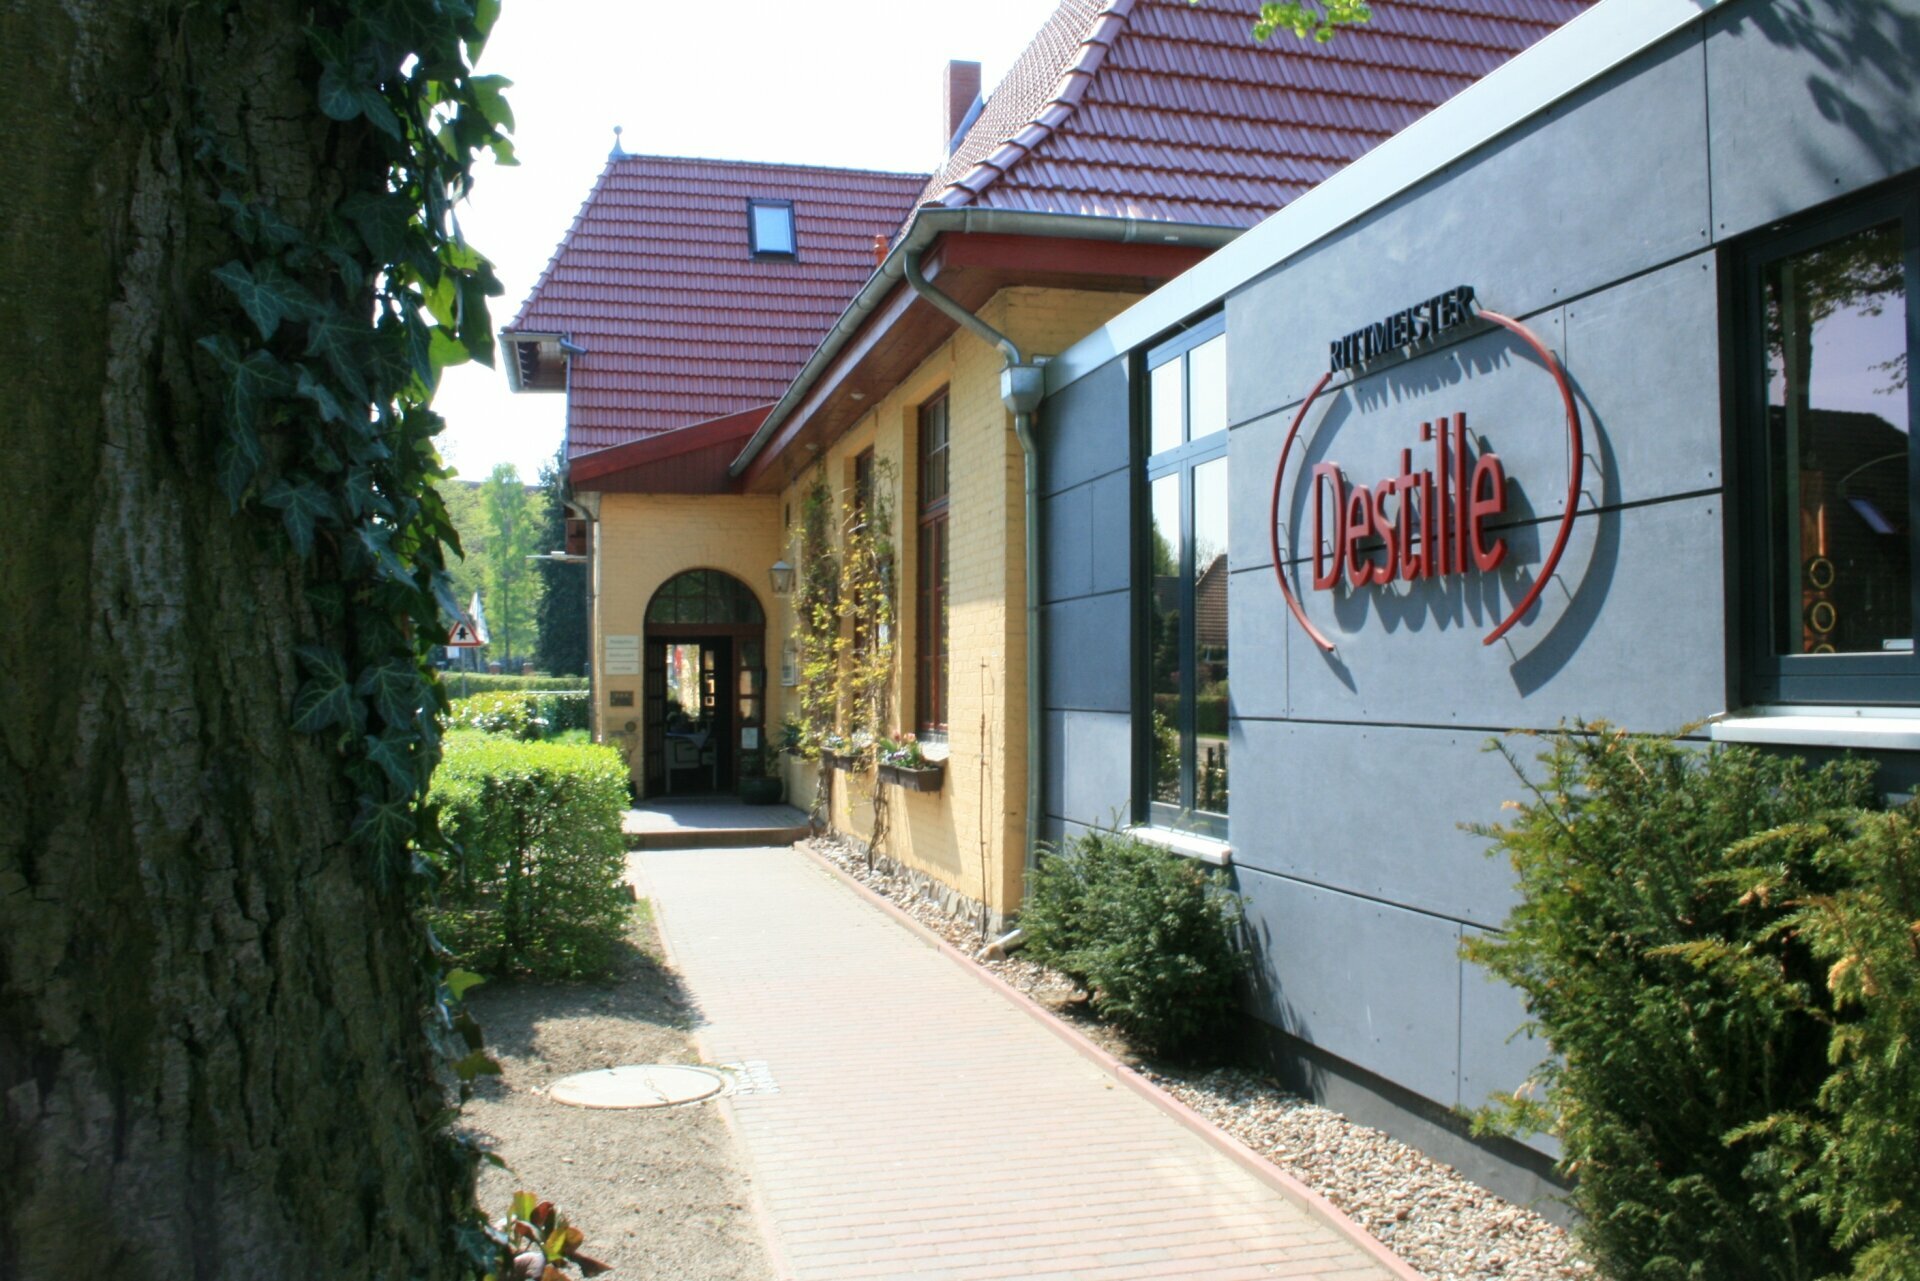 3 Tage Sweet Dreams Landhotel Rittmeister in Rostock, Mecklenburg-Vorpommern inkl. Halbpension